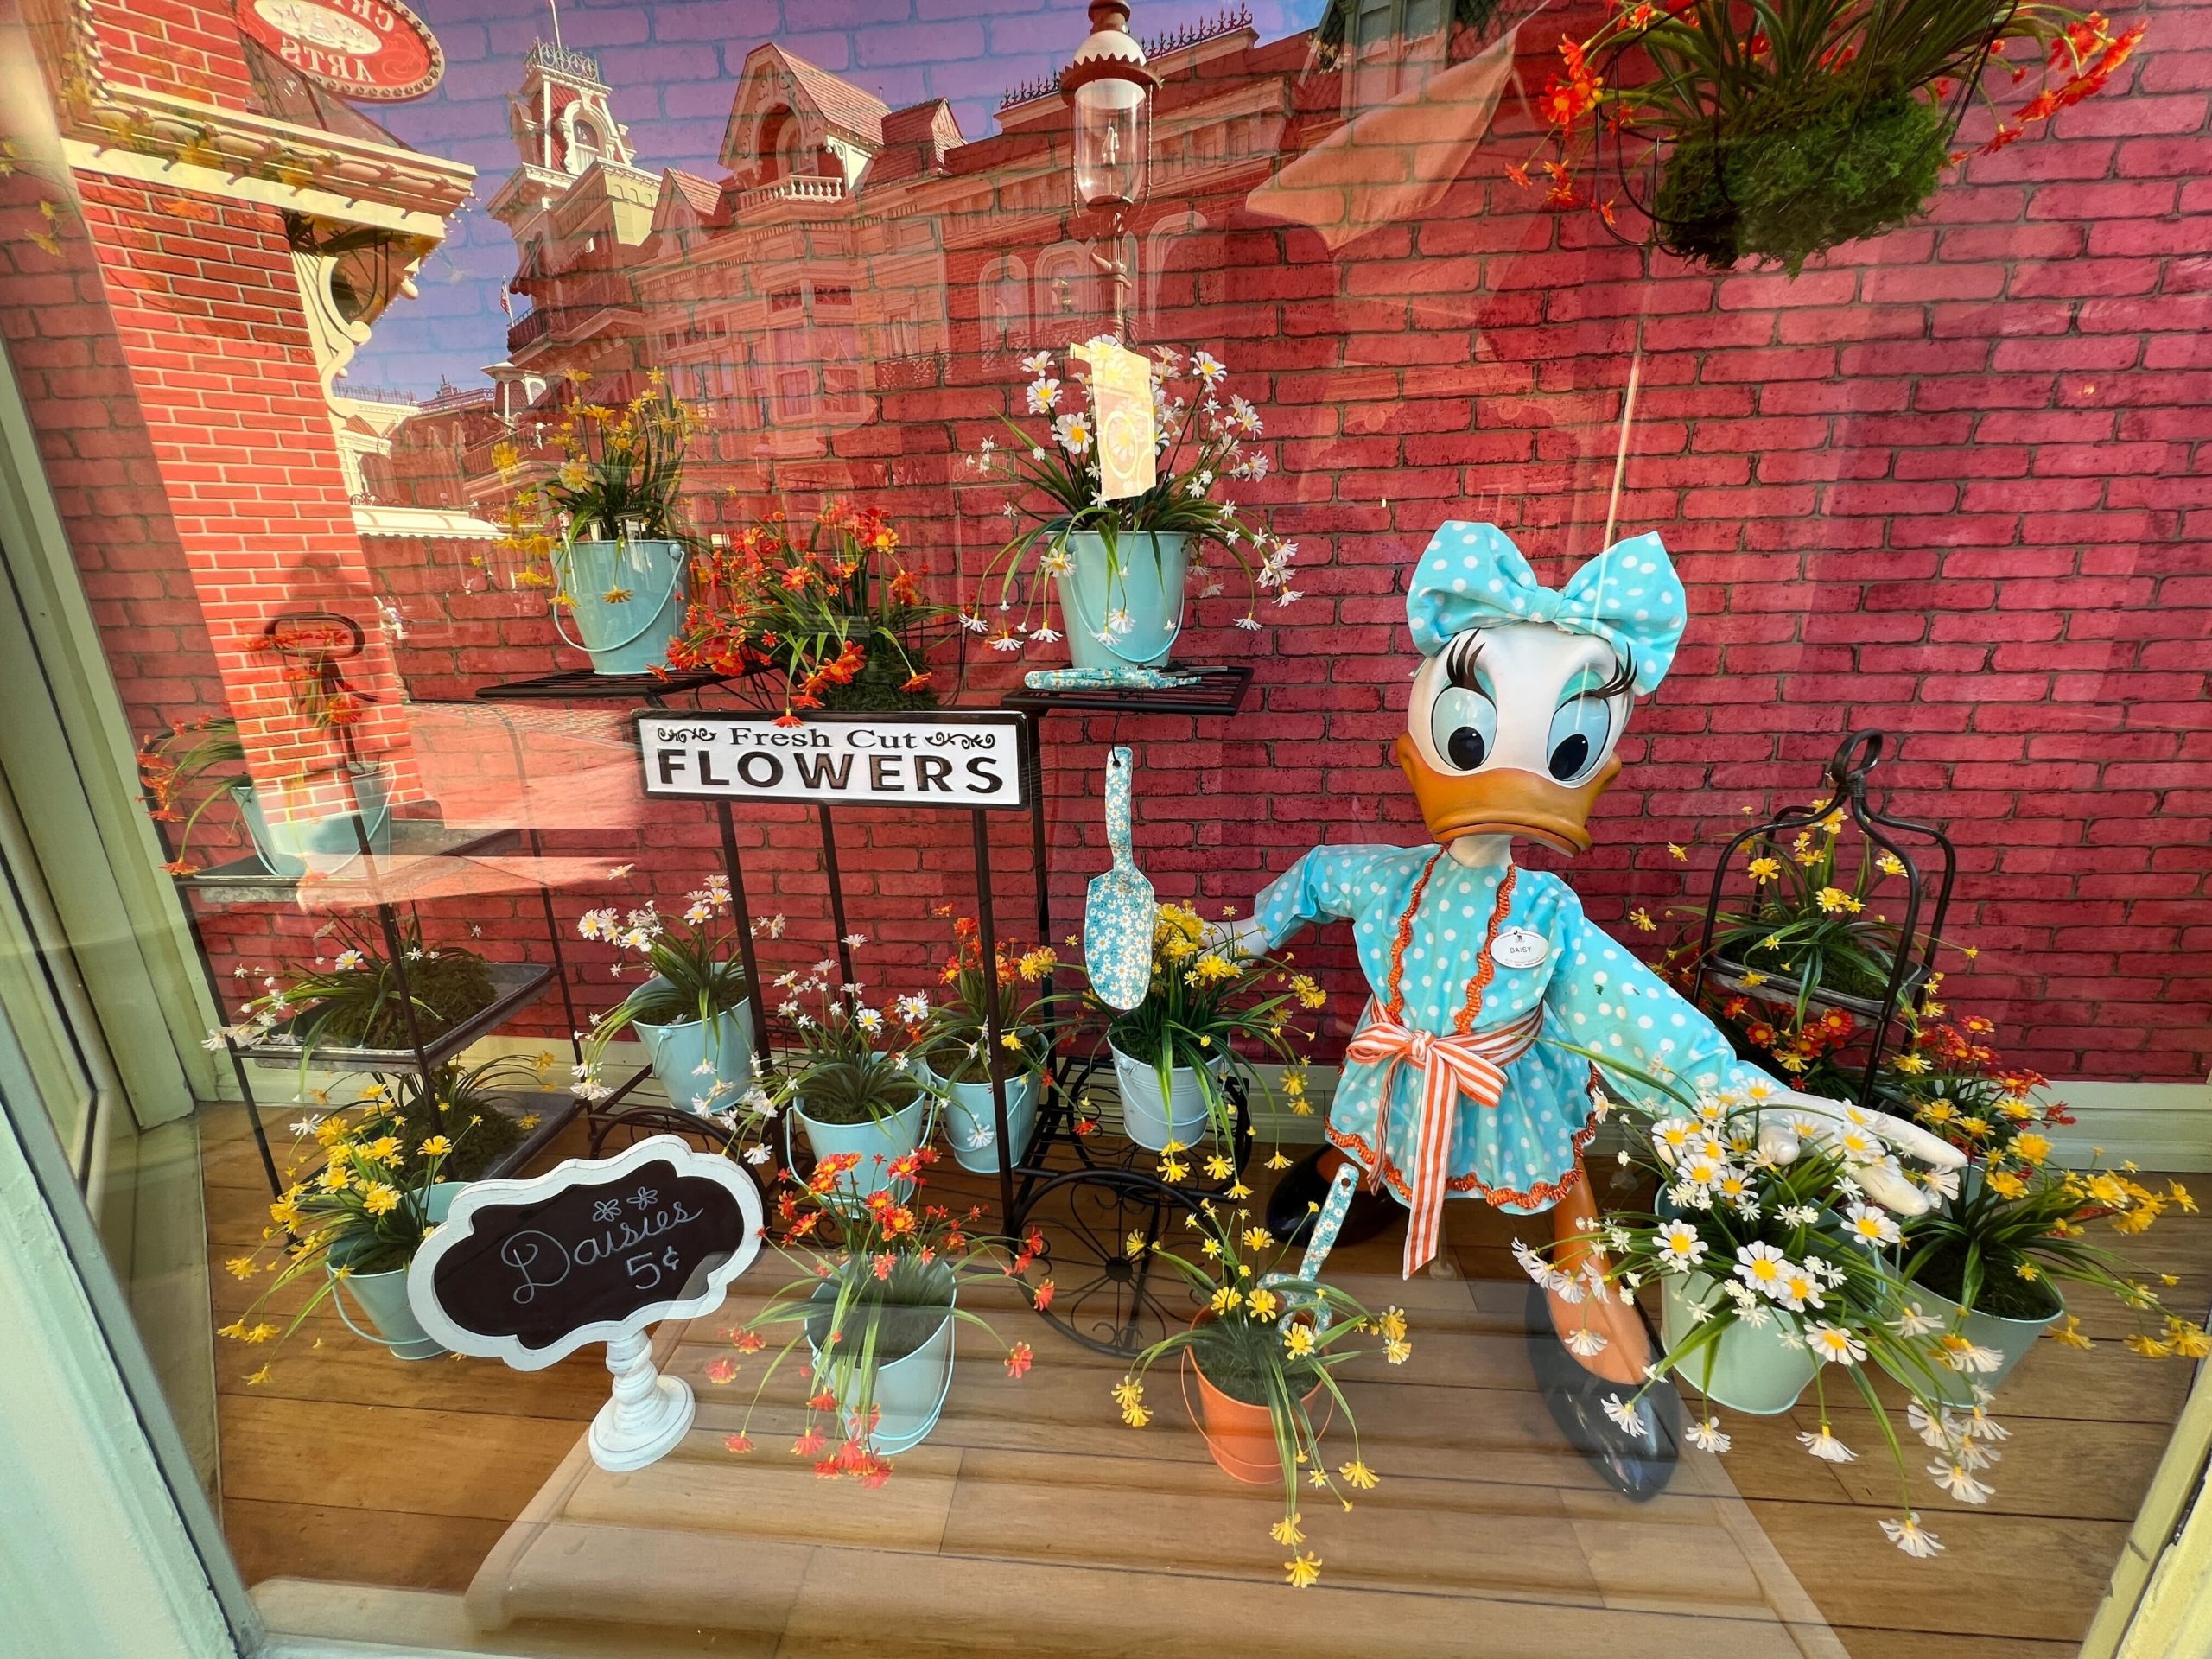 New Daisy Flower Shop Display Arrives on Main Street USA